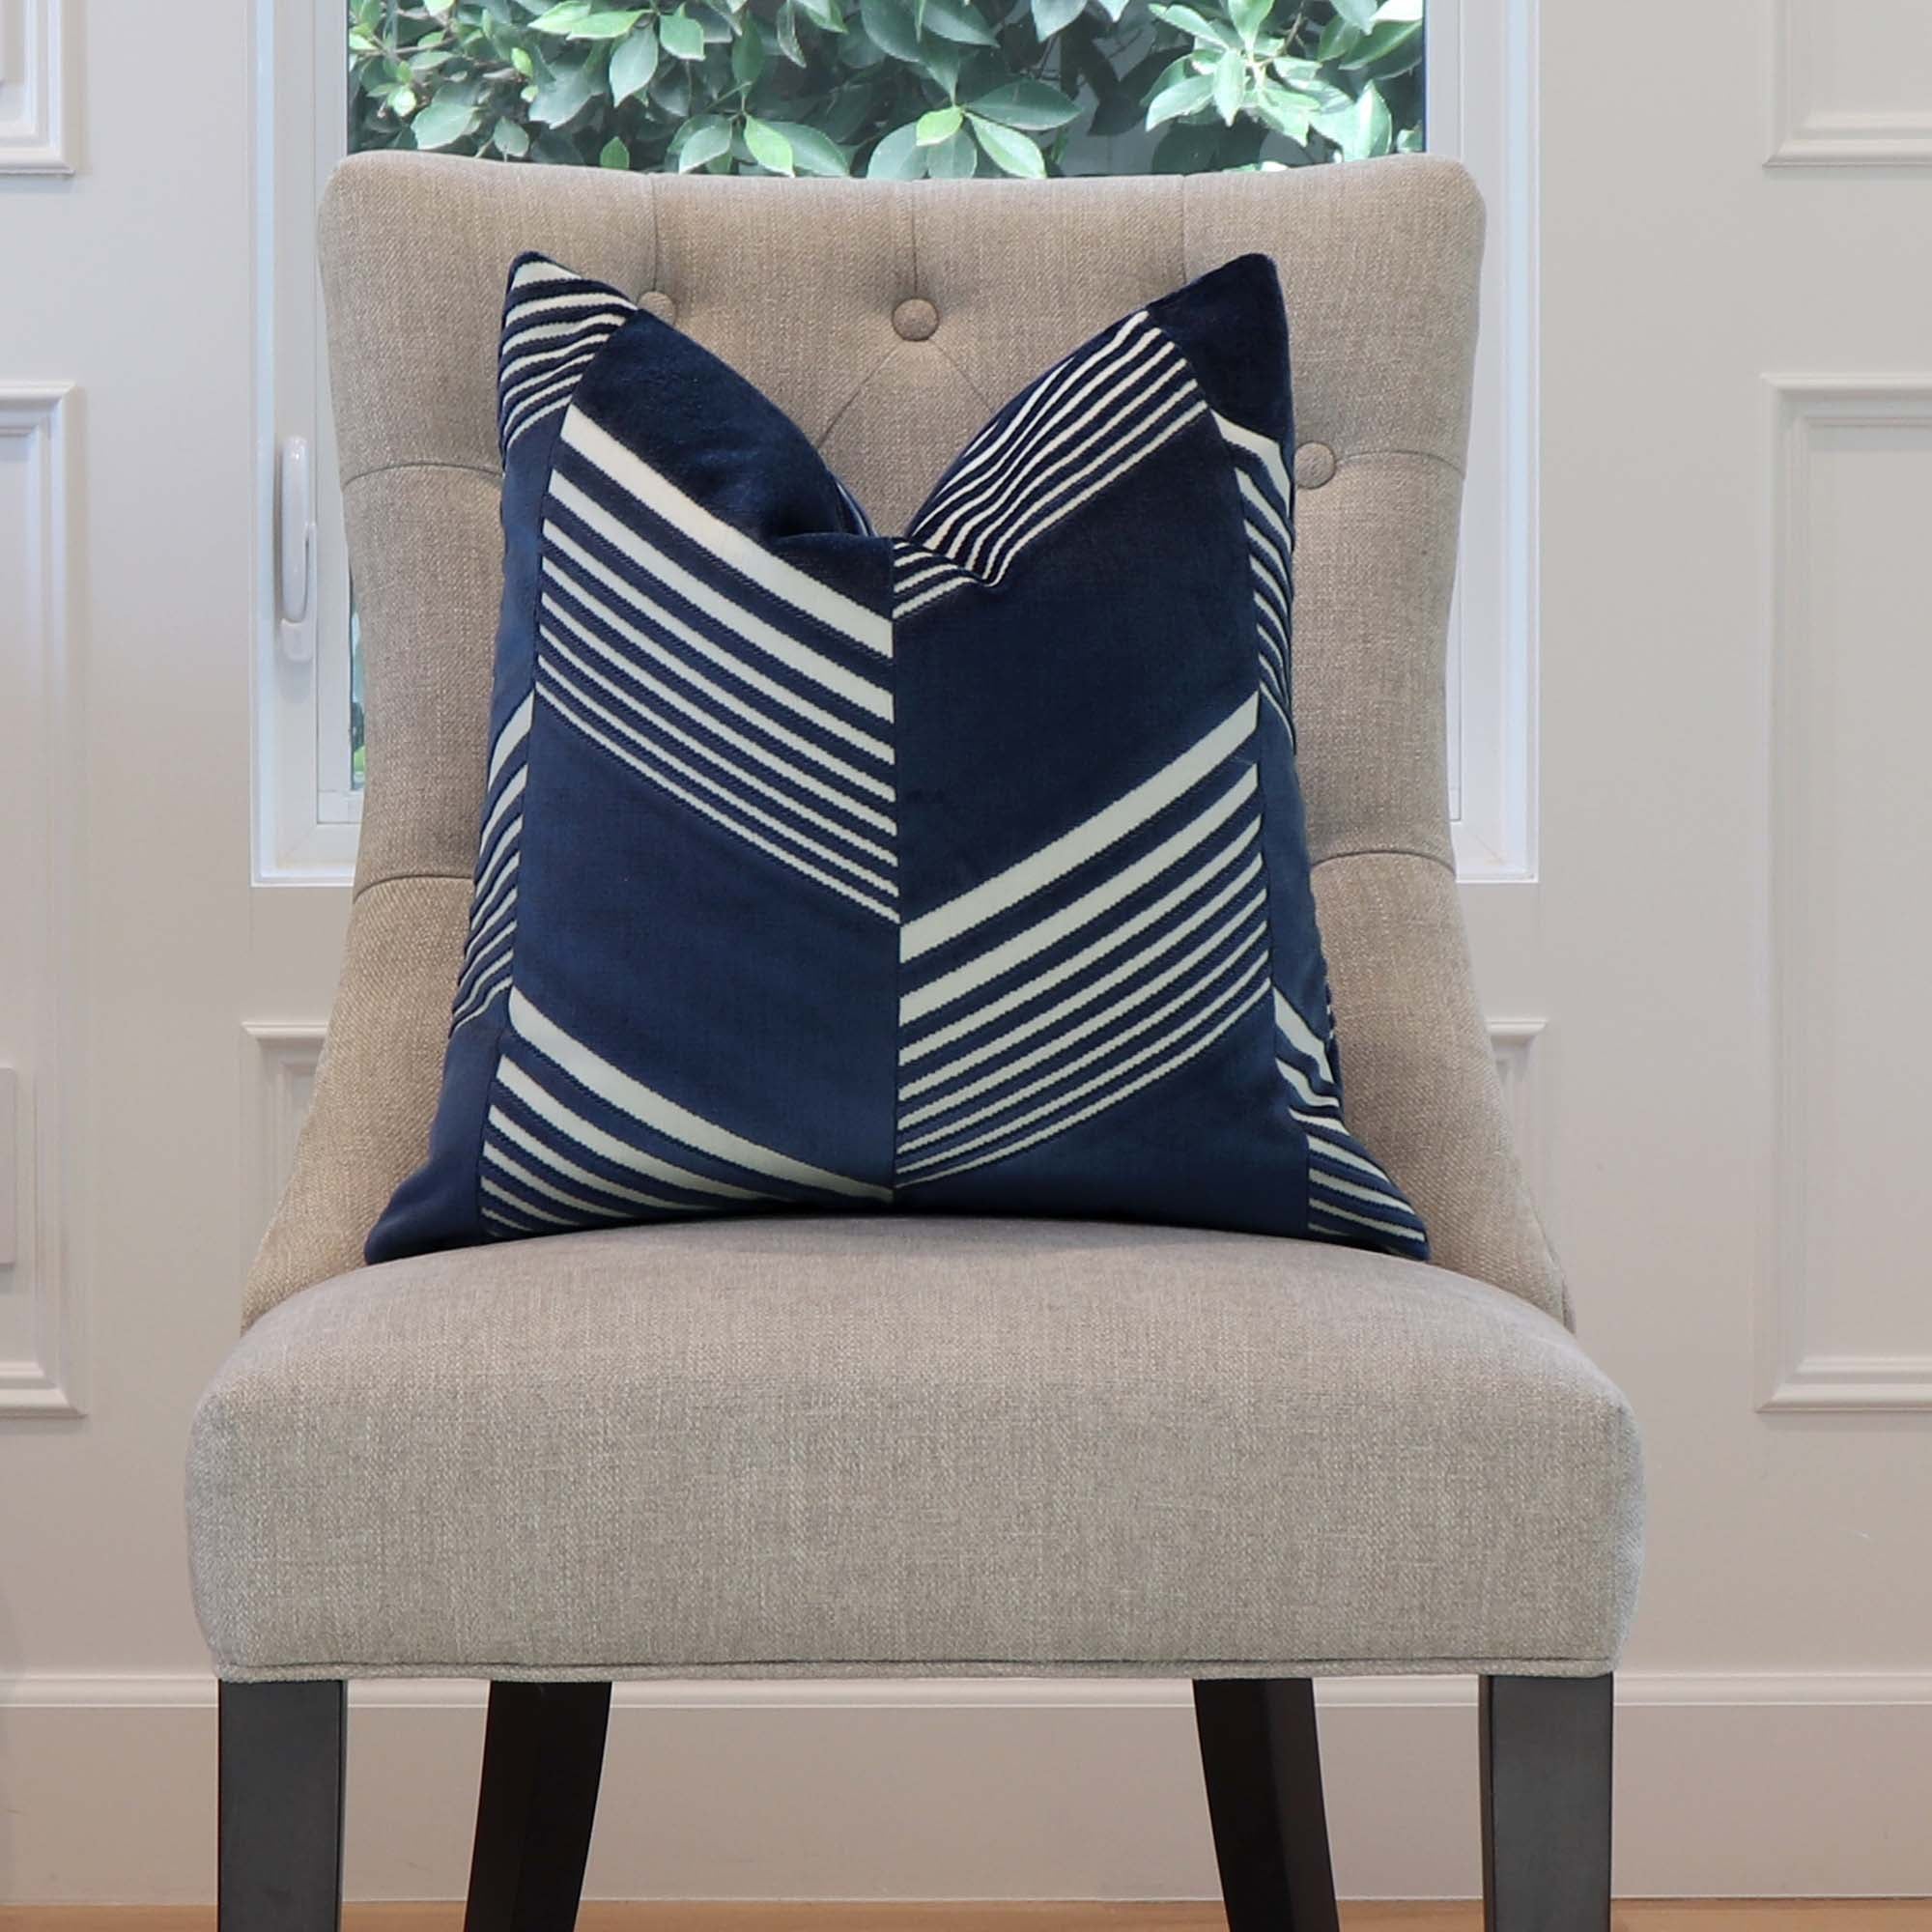 Schumacher Jessie Cut Velvet Navy Blue Designer Decorative Throw Pillow Cover on Armless Chair in Home